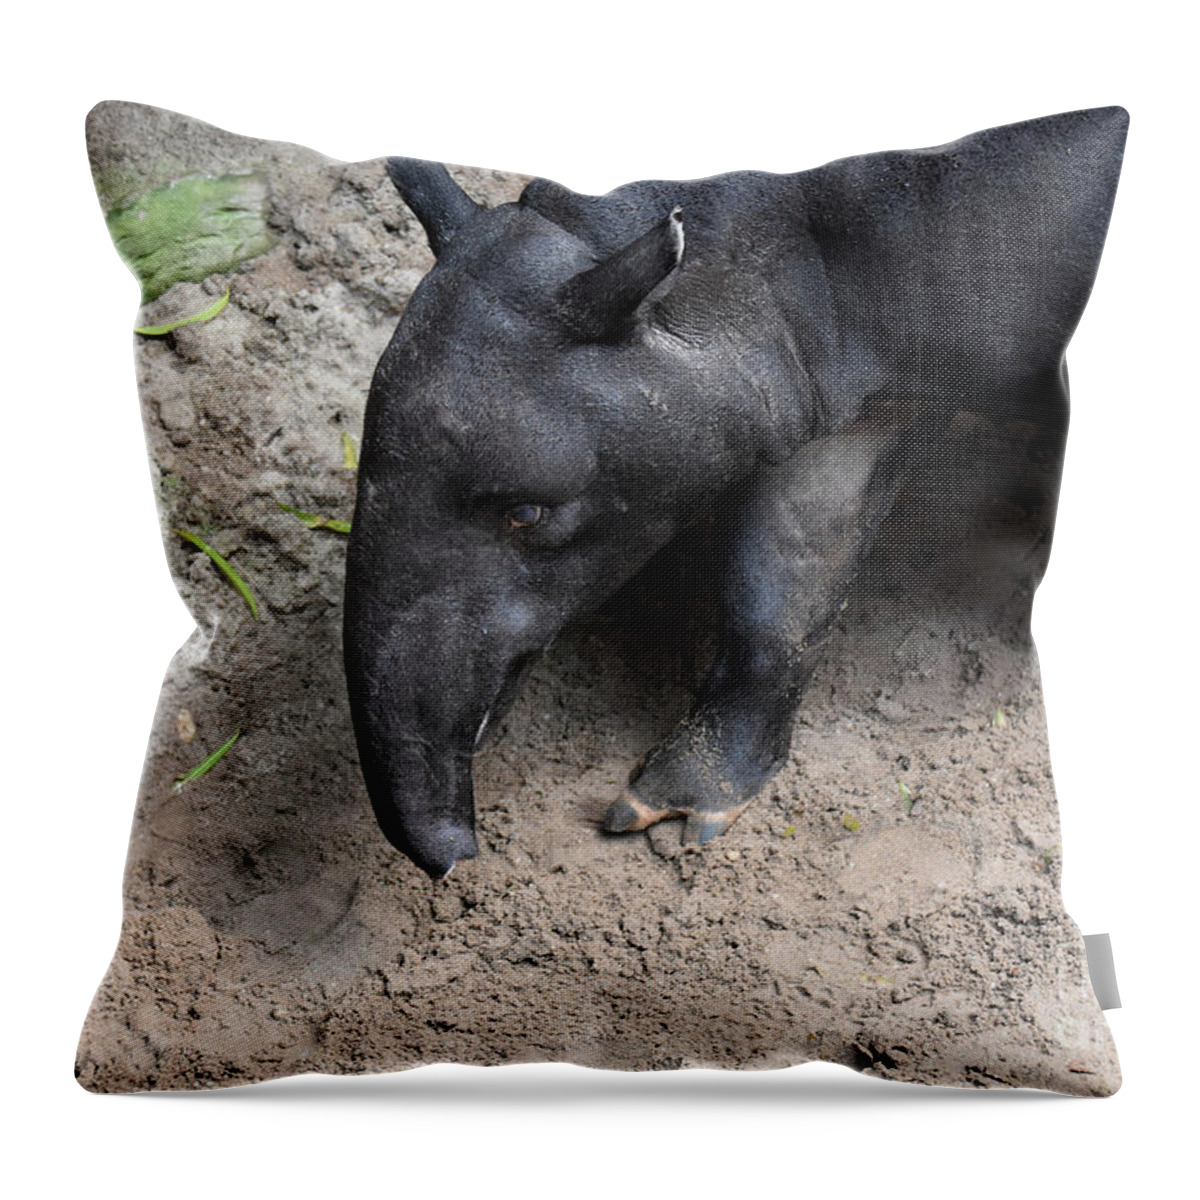 Tapir Throw Pillow featuring the photograph Vibrant wild bairds tapir walking around by DejaVu Designs